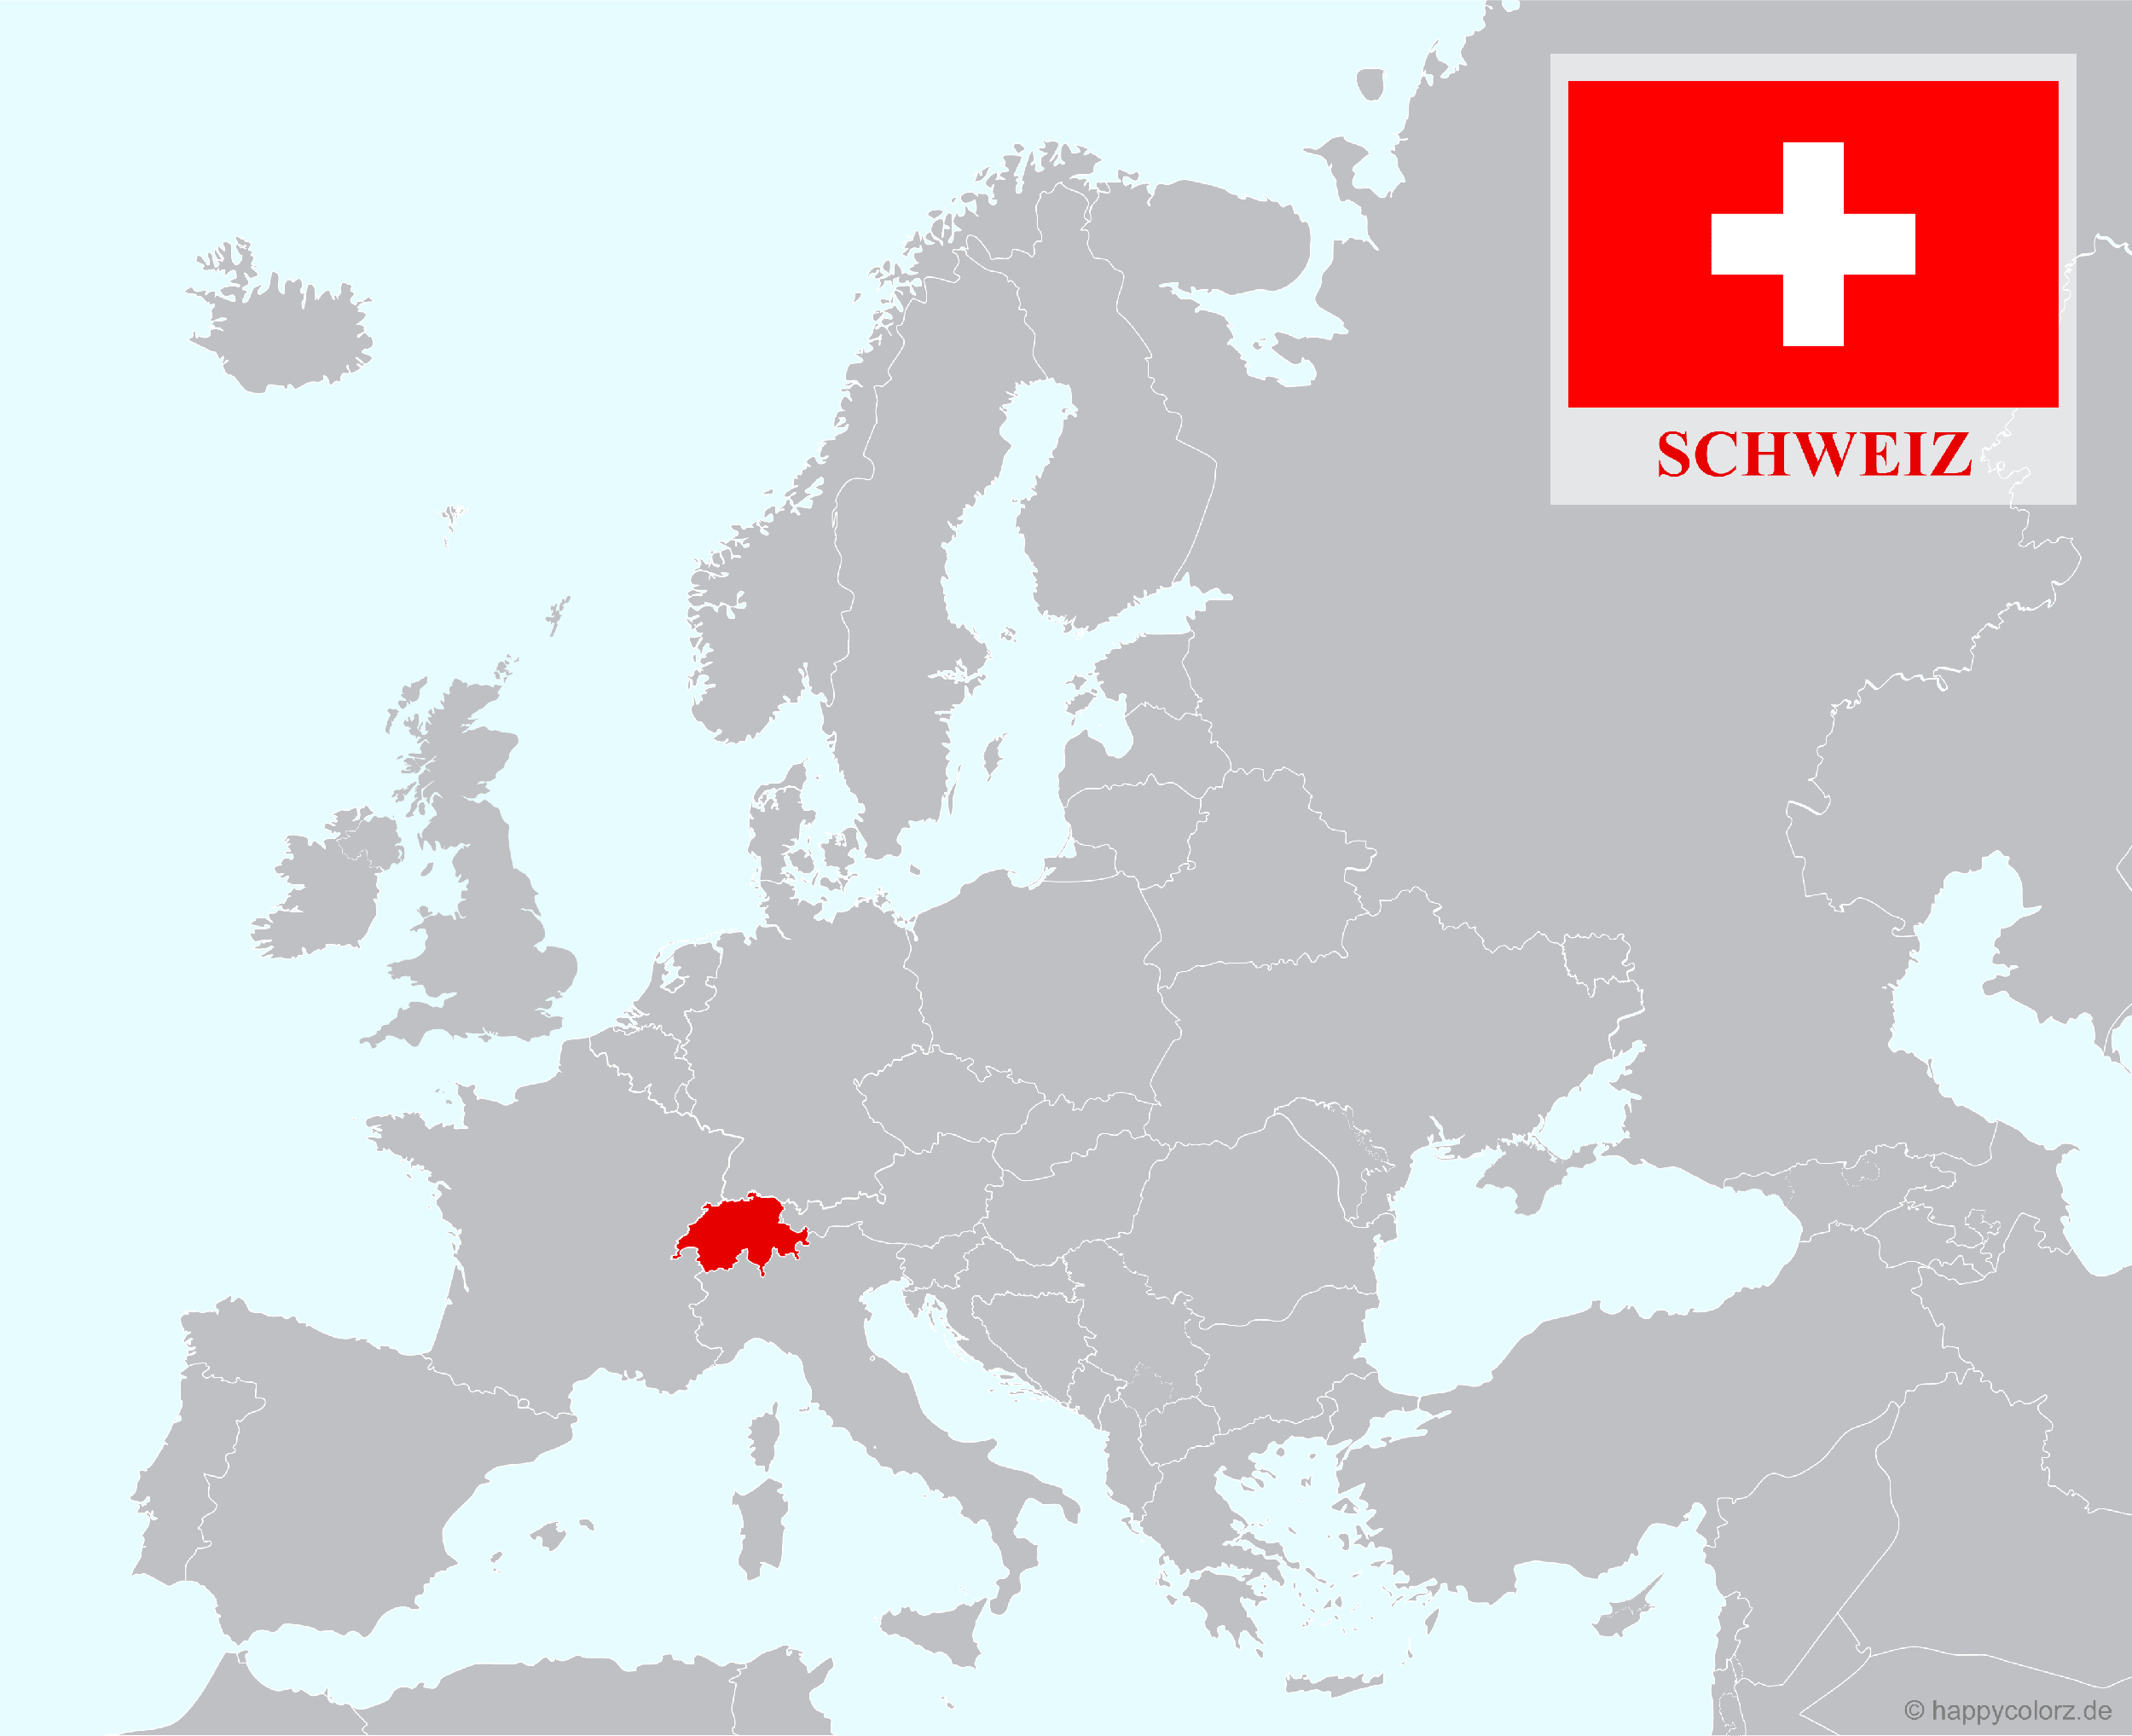 Europakarte mit Schweiz als hervorgehobenes Land